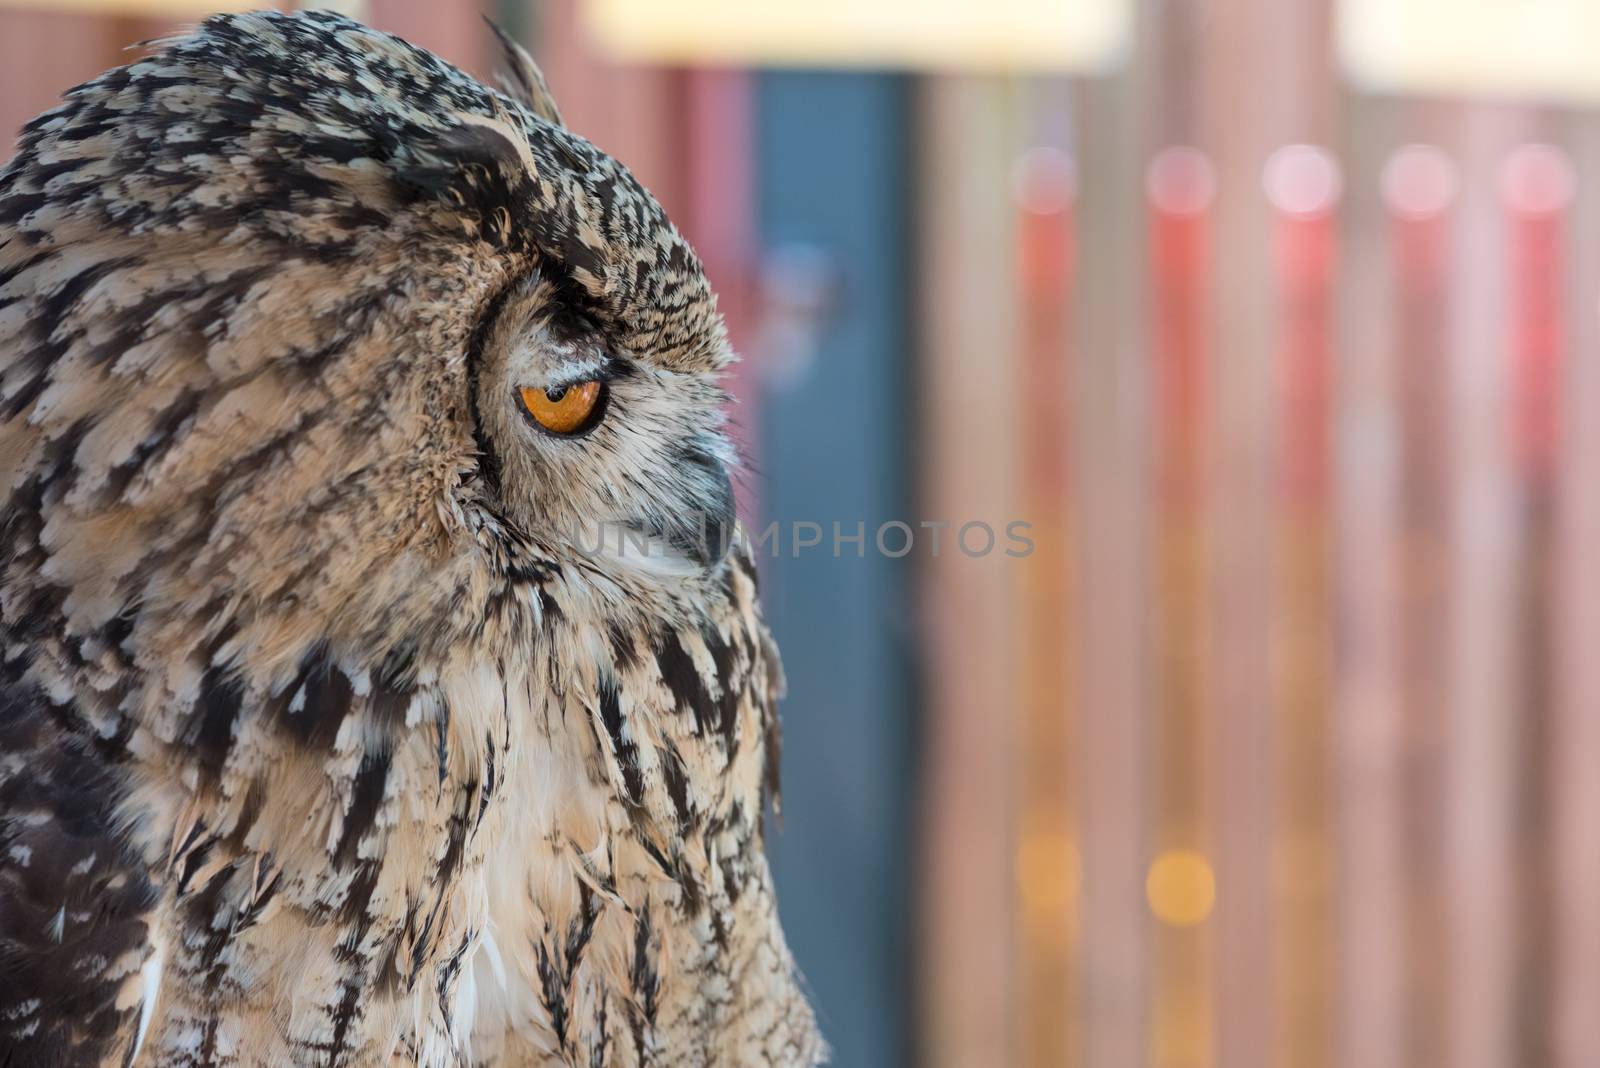 Snobby Owl by justtscott